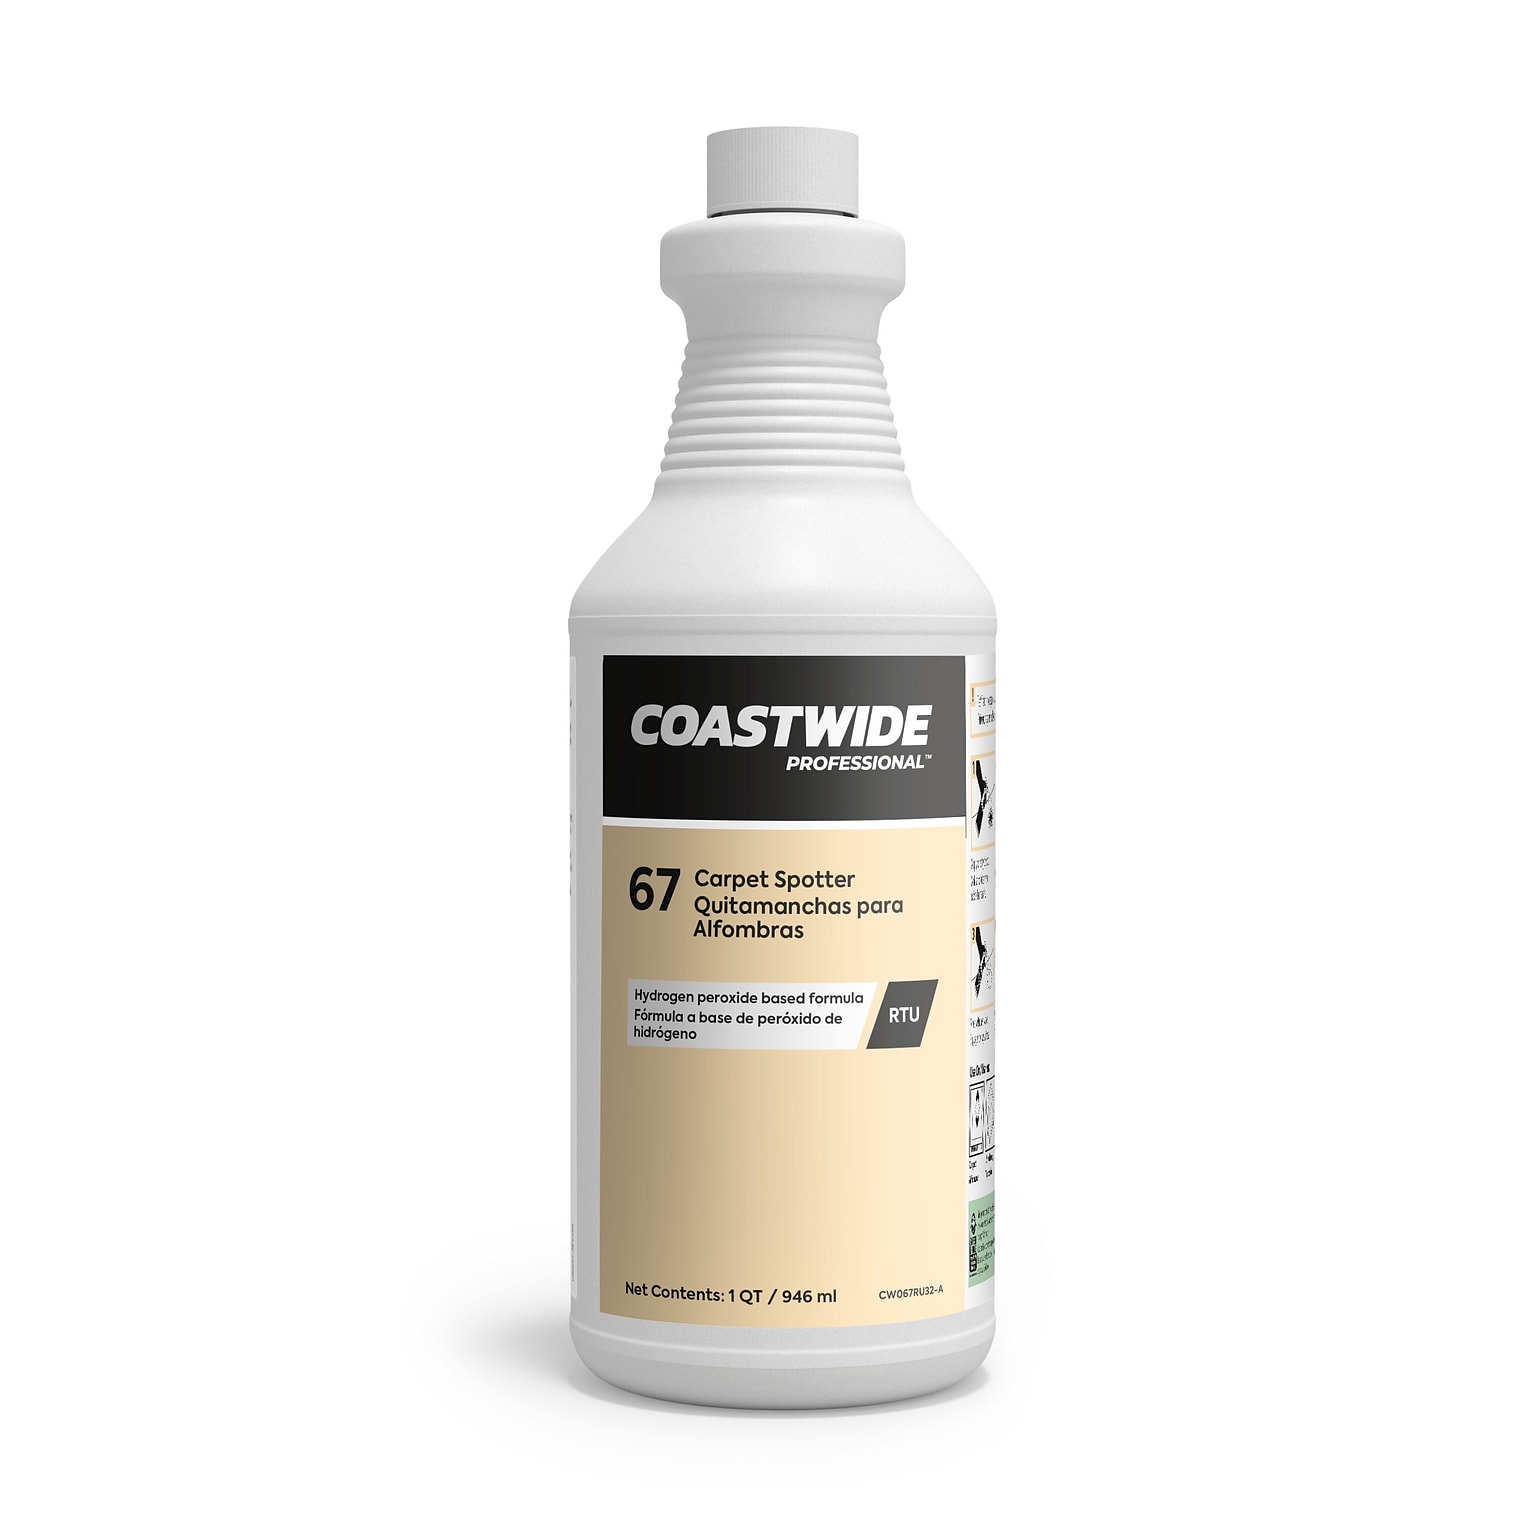 Coastwide Professional™ Carpet Spotter 67, 0.95L, 6/Carton (CW670032-A)